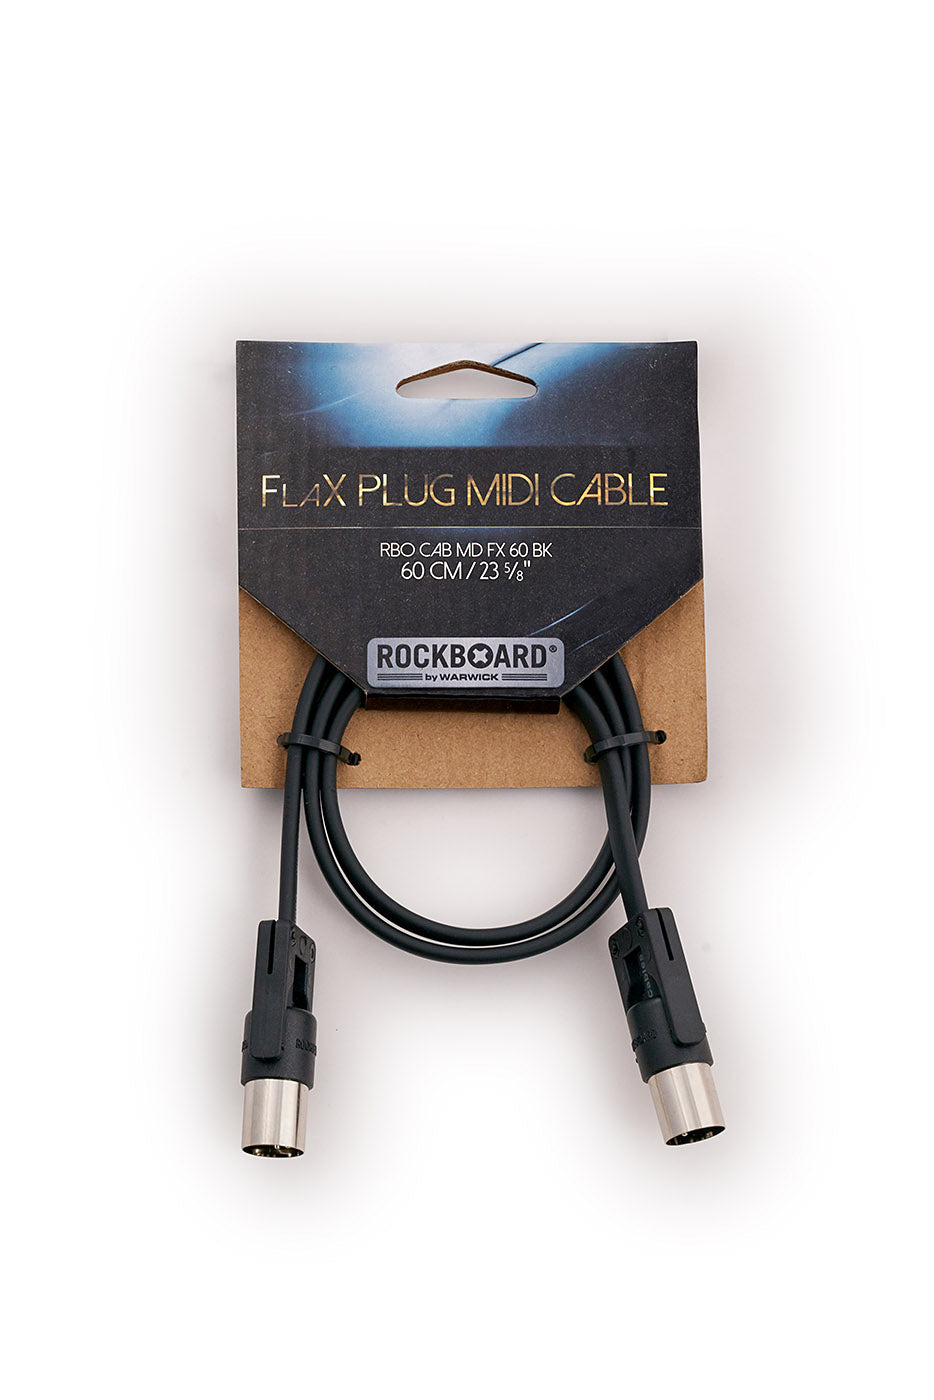 RockBoard FlaX Plug MIDI Cable, 60 cm / 23 5/8